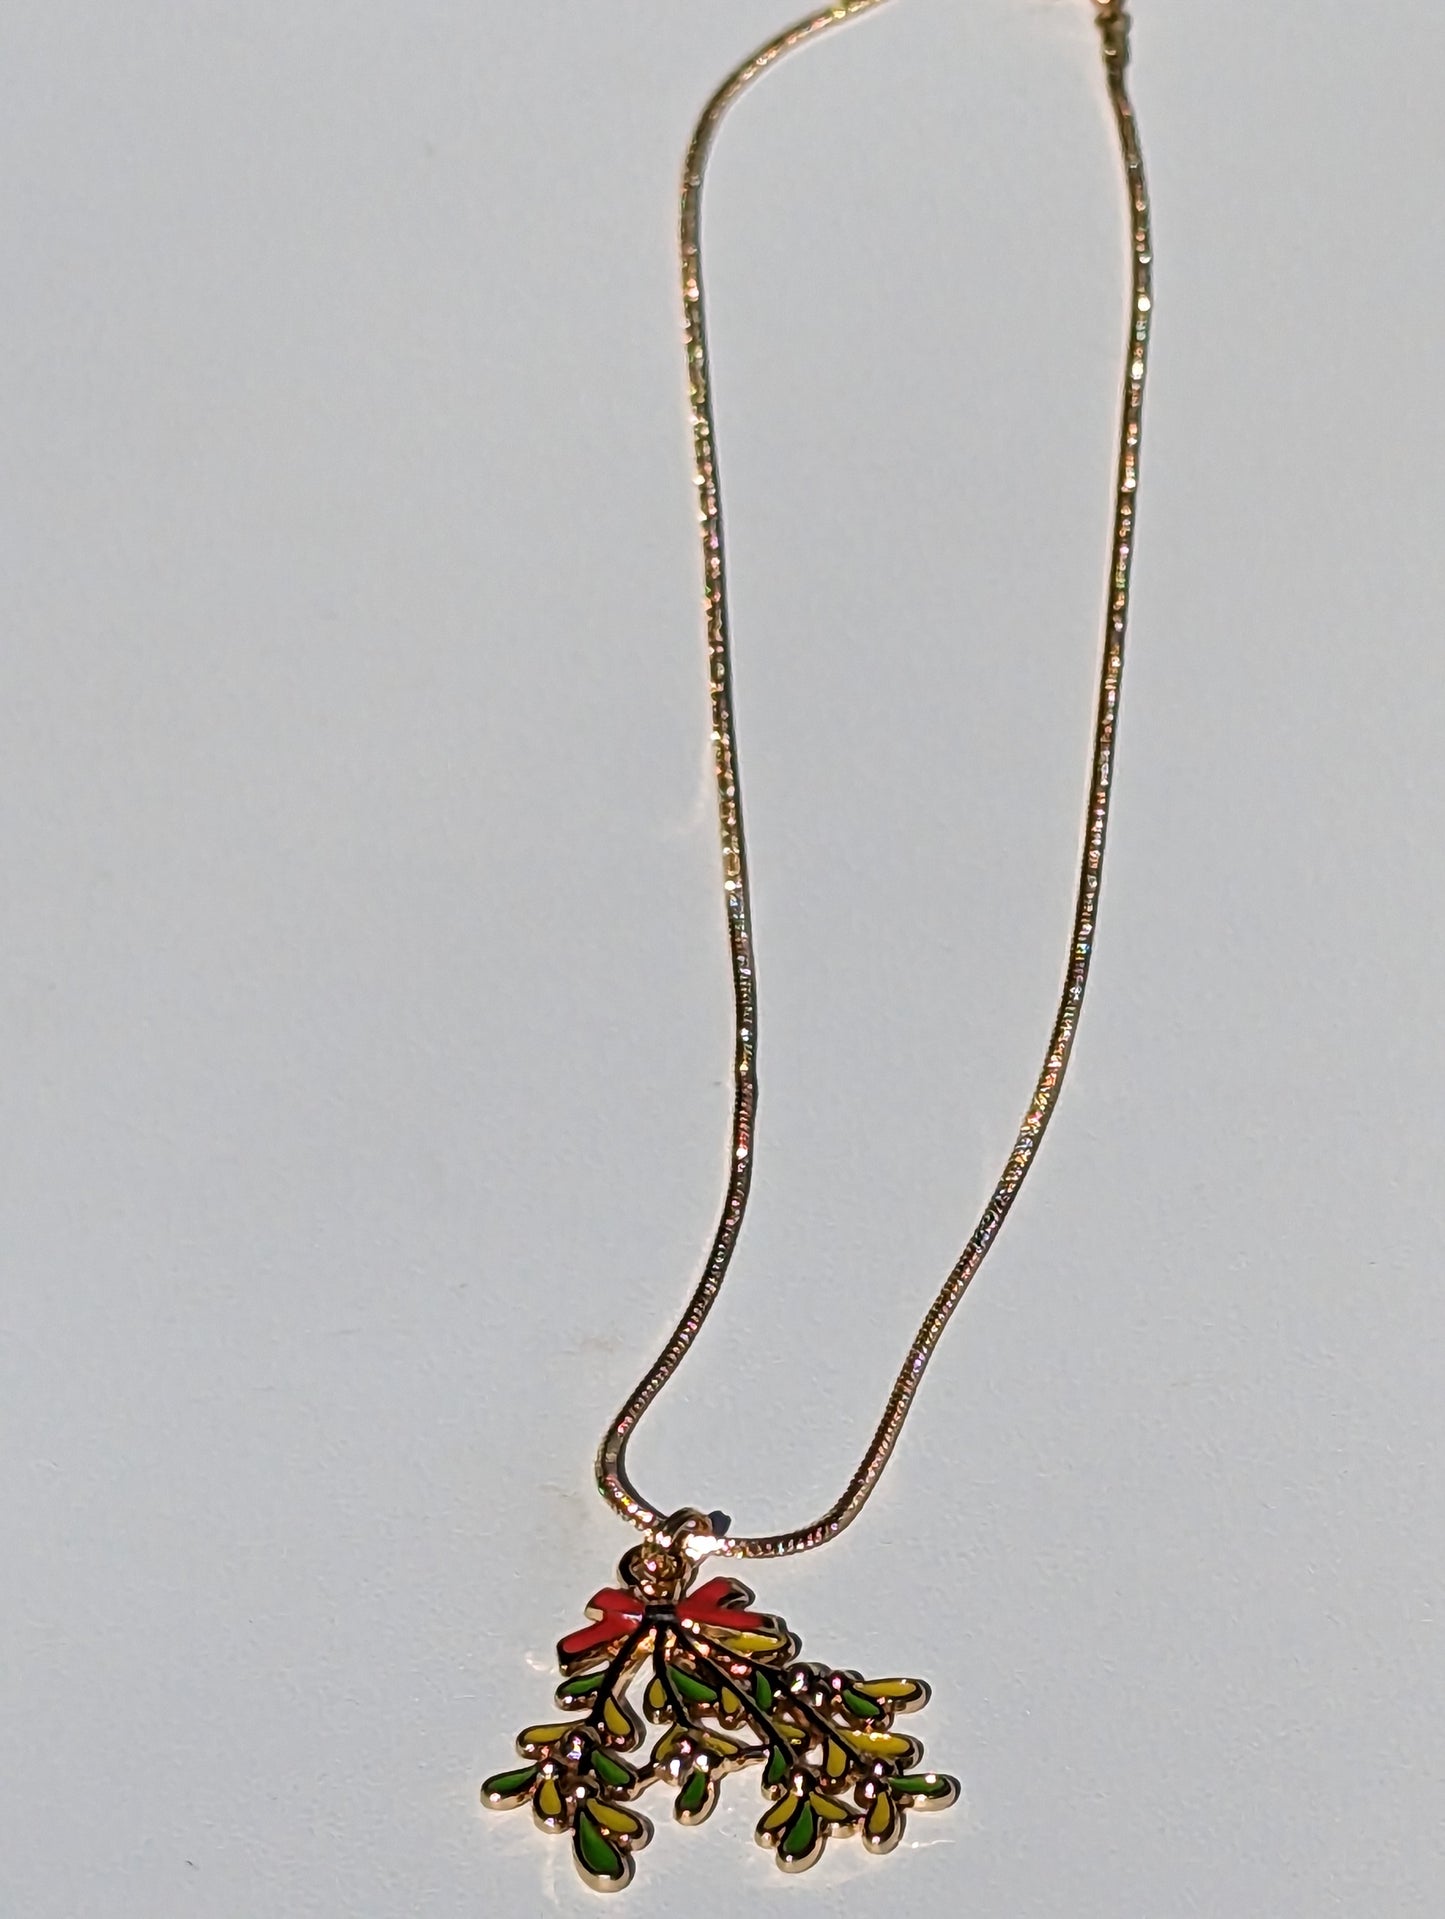 Golden Necklace with Mistletoe Pendant